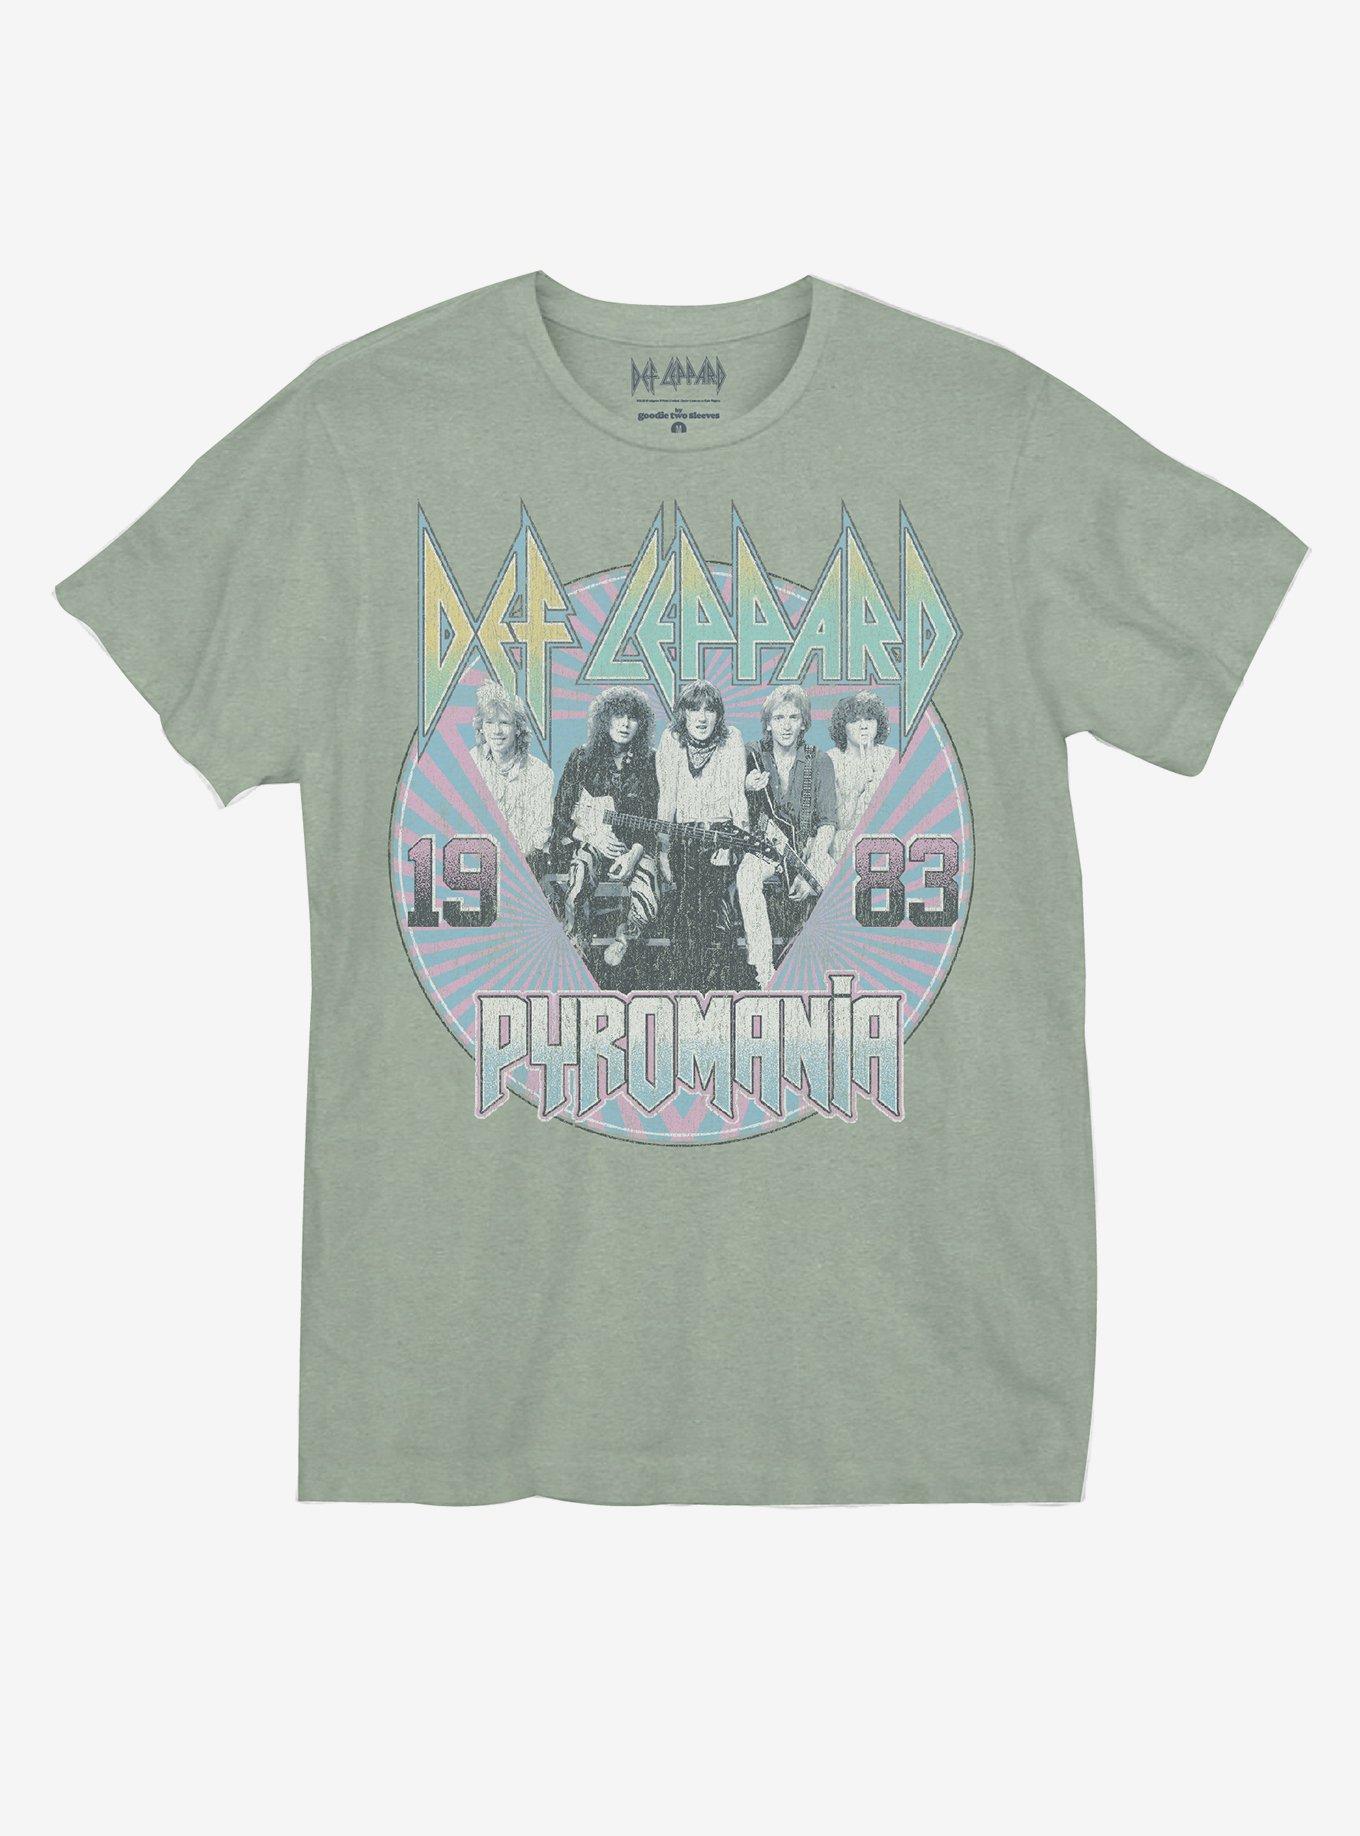 Def Leppard 1983 Pyromania Tour Boyfriend Fit Girls T-Shirt